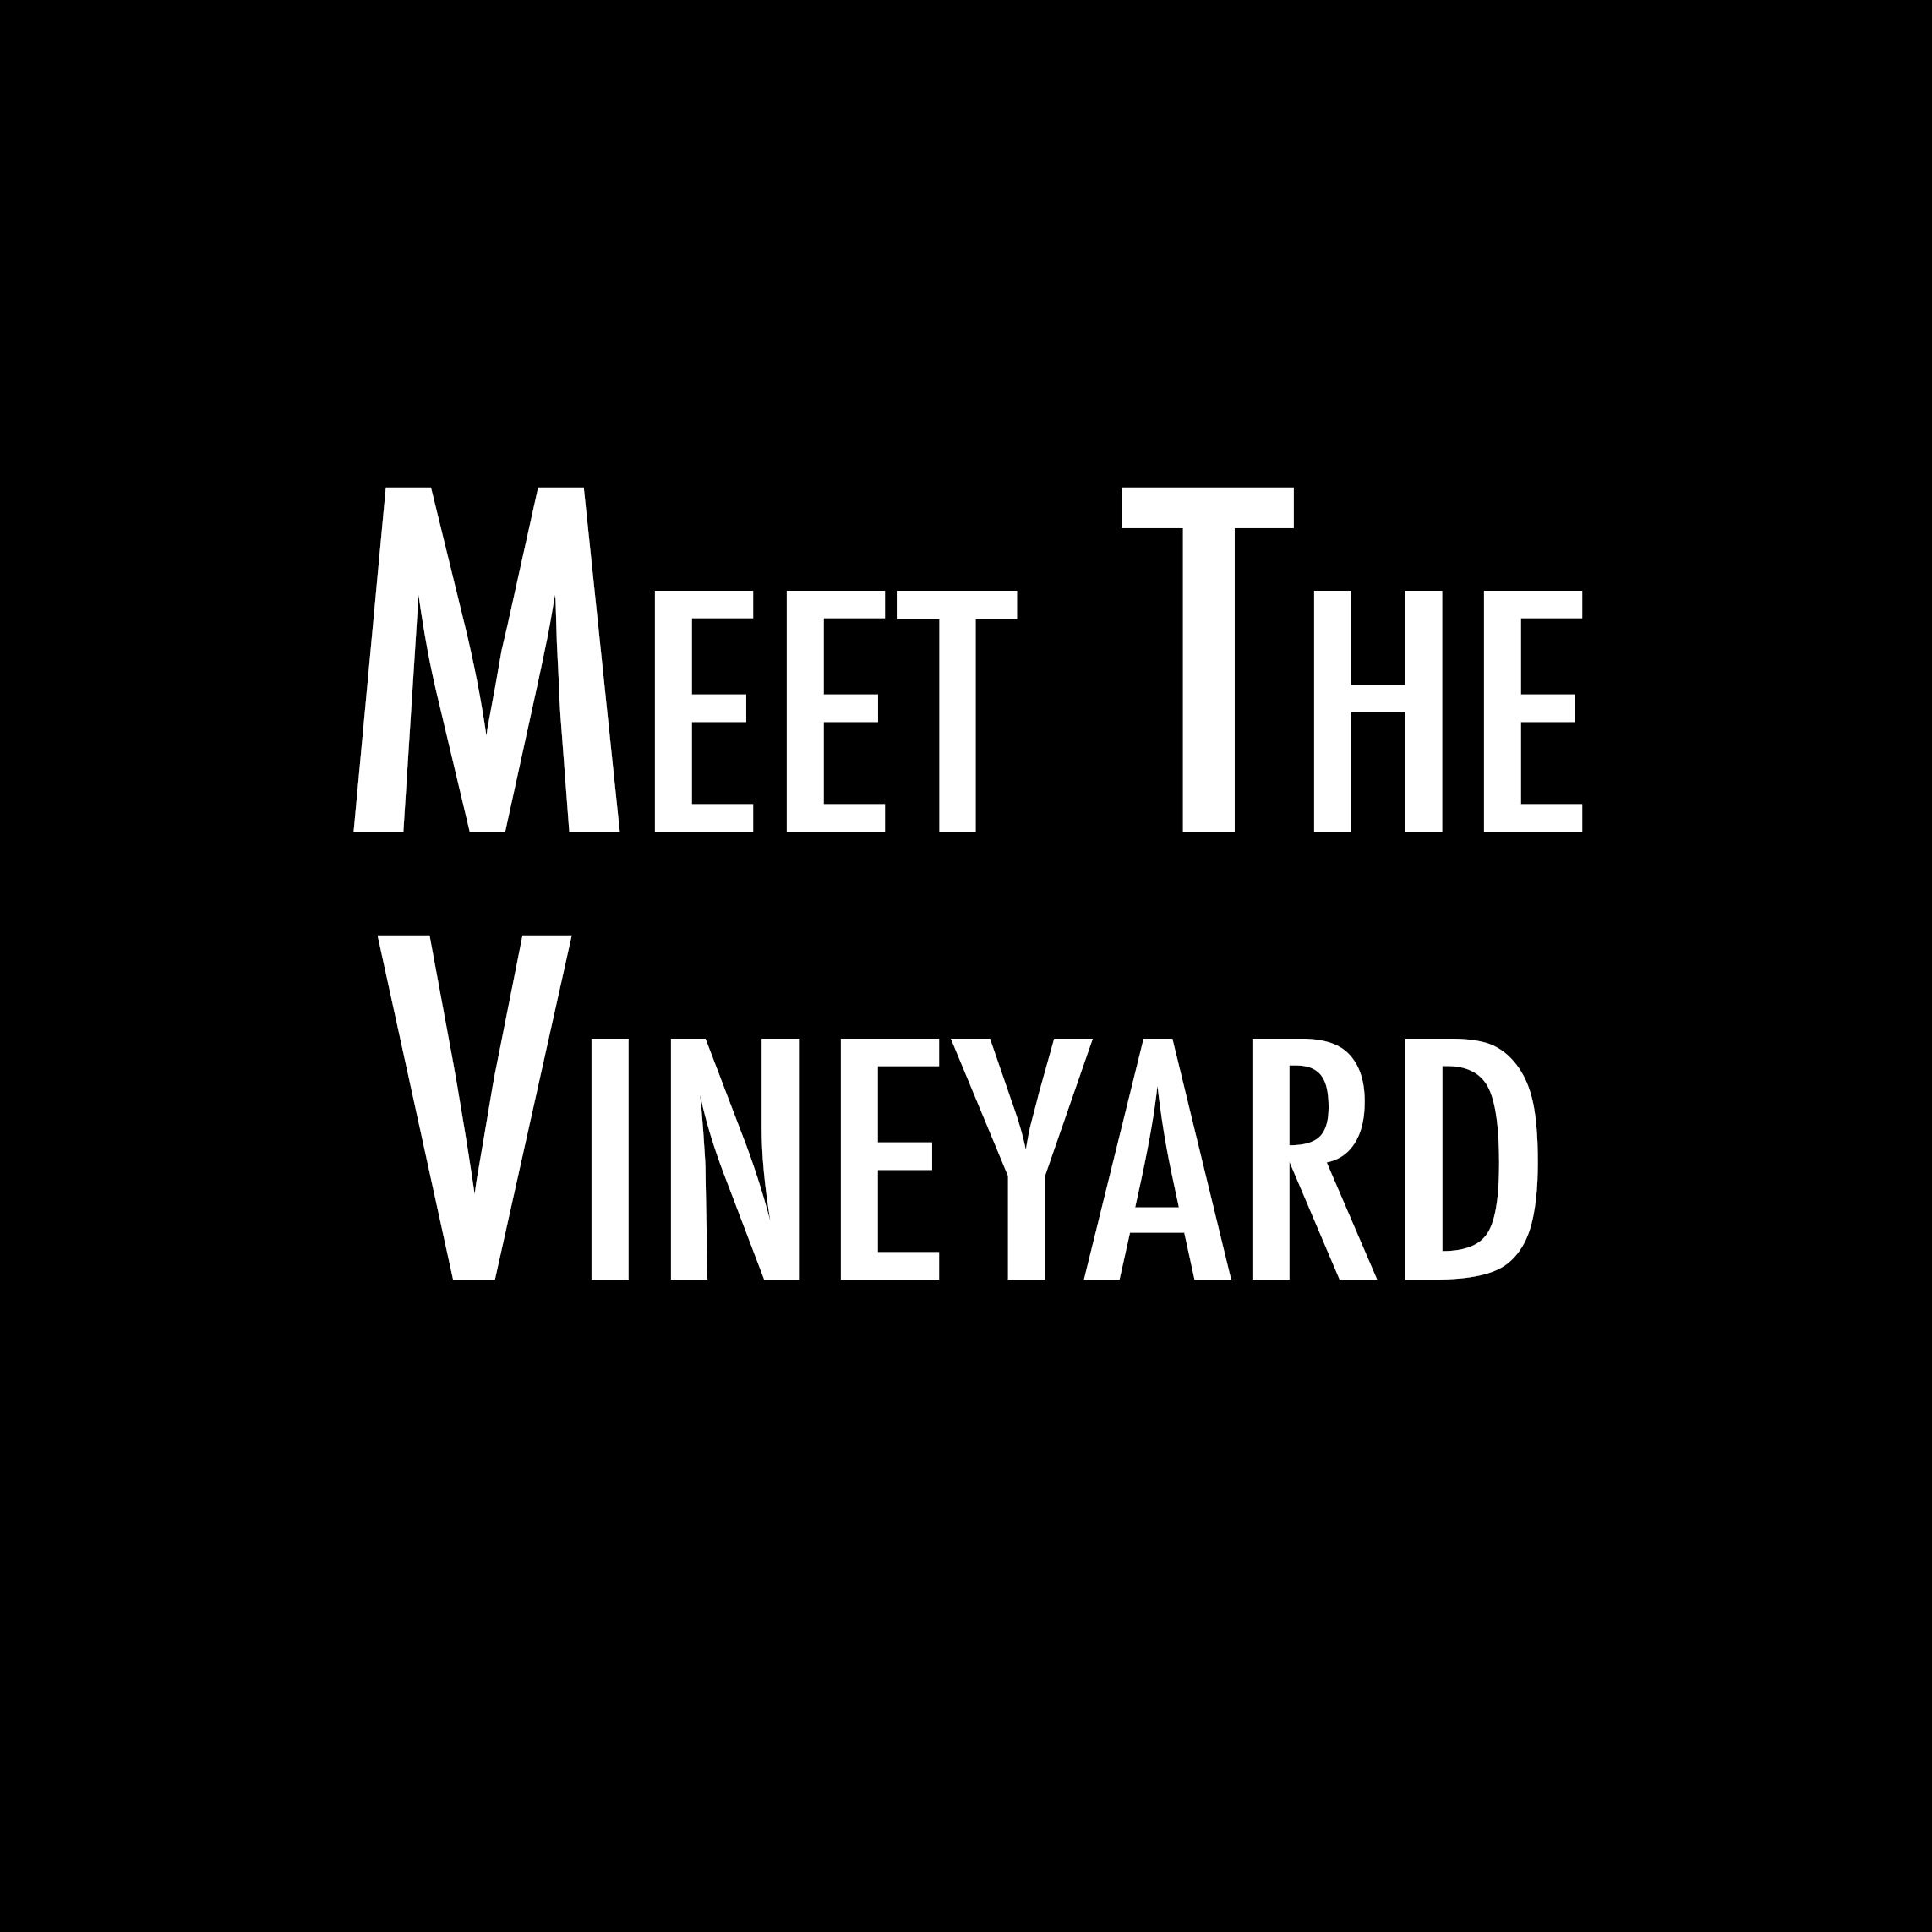 Meet the Vineyard